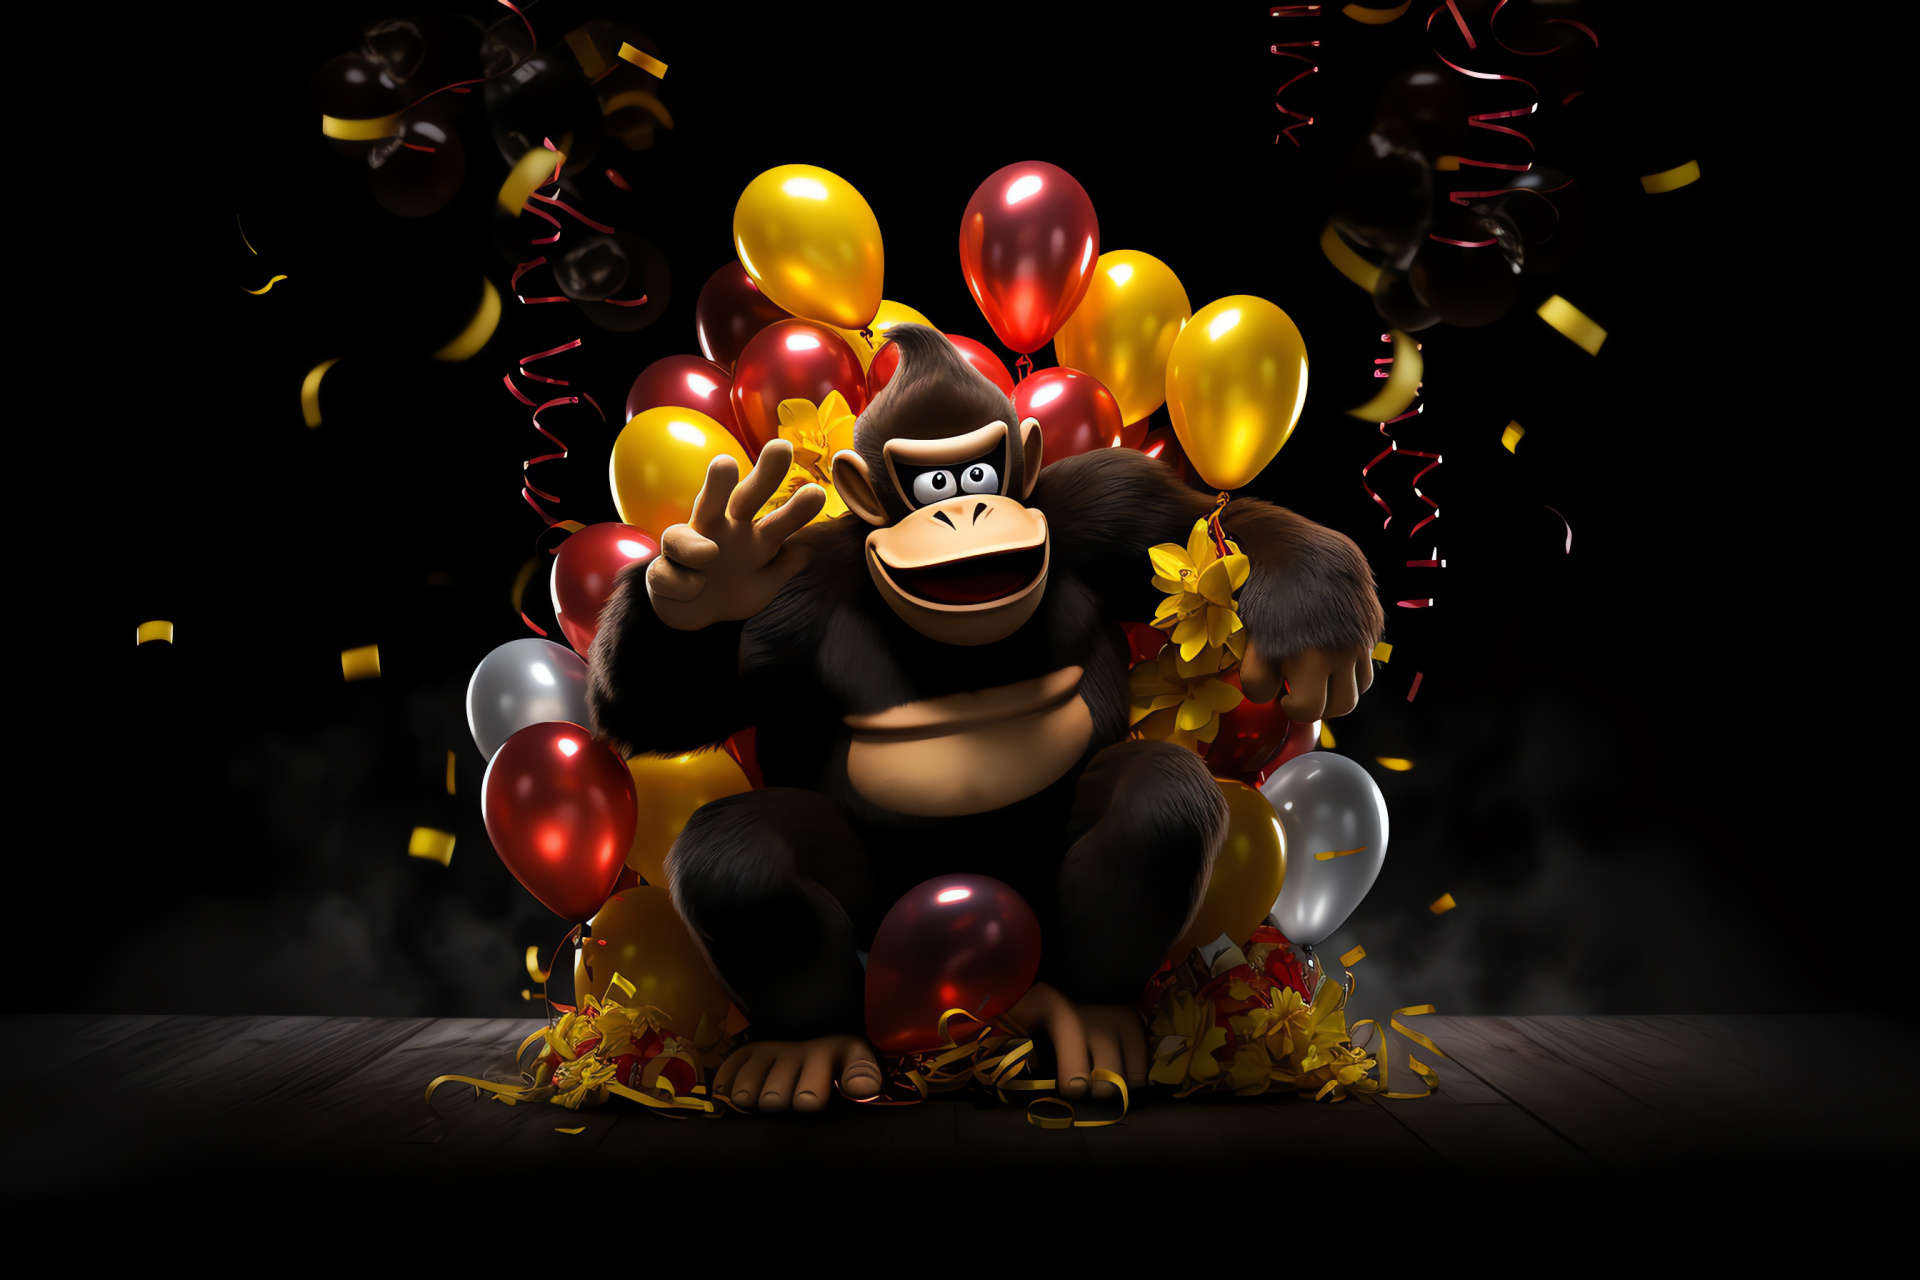 Donkey Kong character, Nintendo arcade classic, Jungle habitat, Banana hoard, Gaming nostalgia, HD Desktop Image